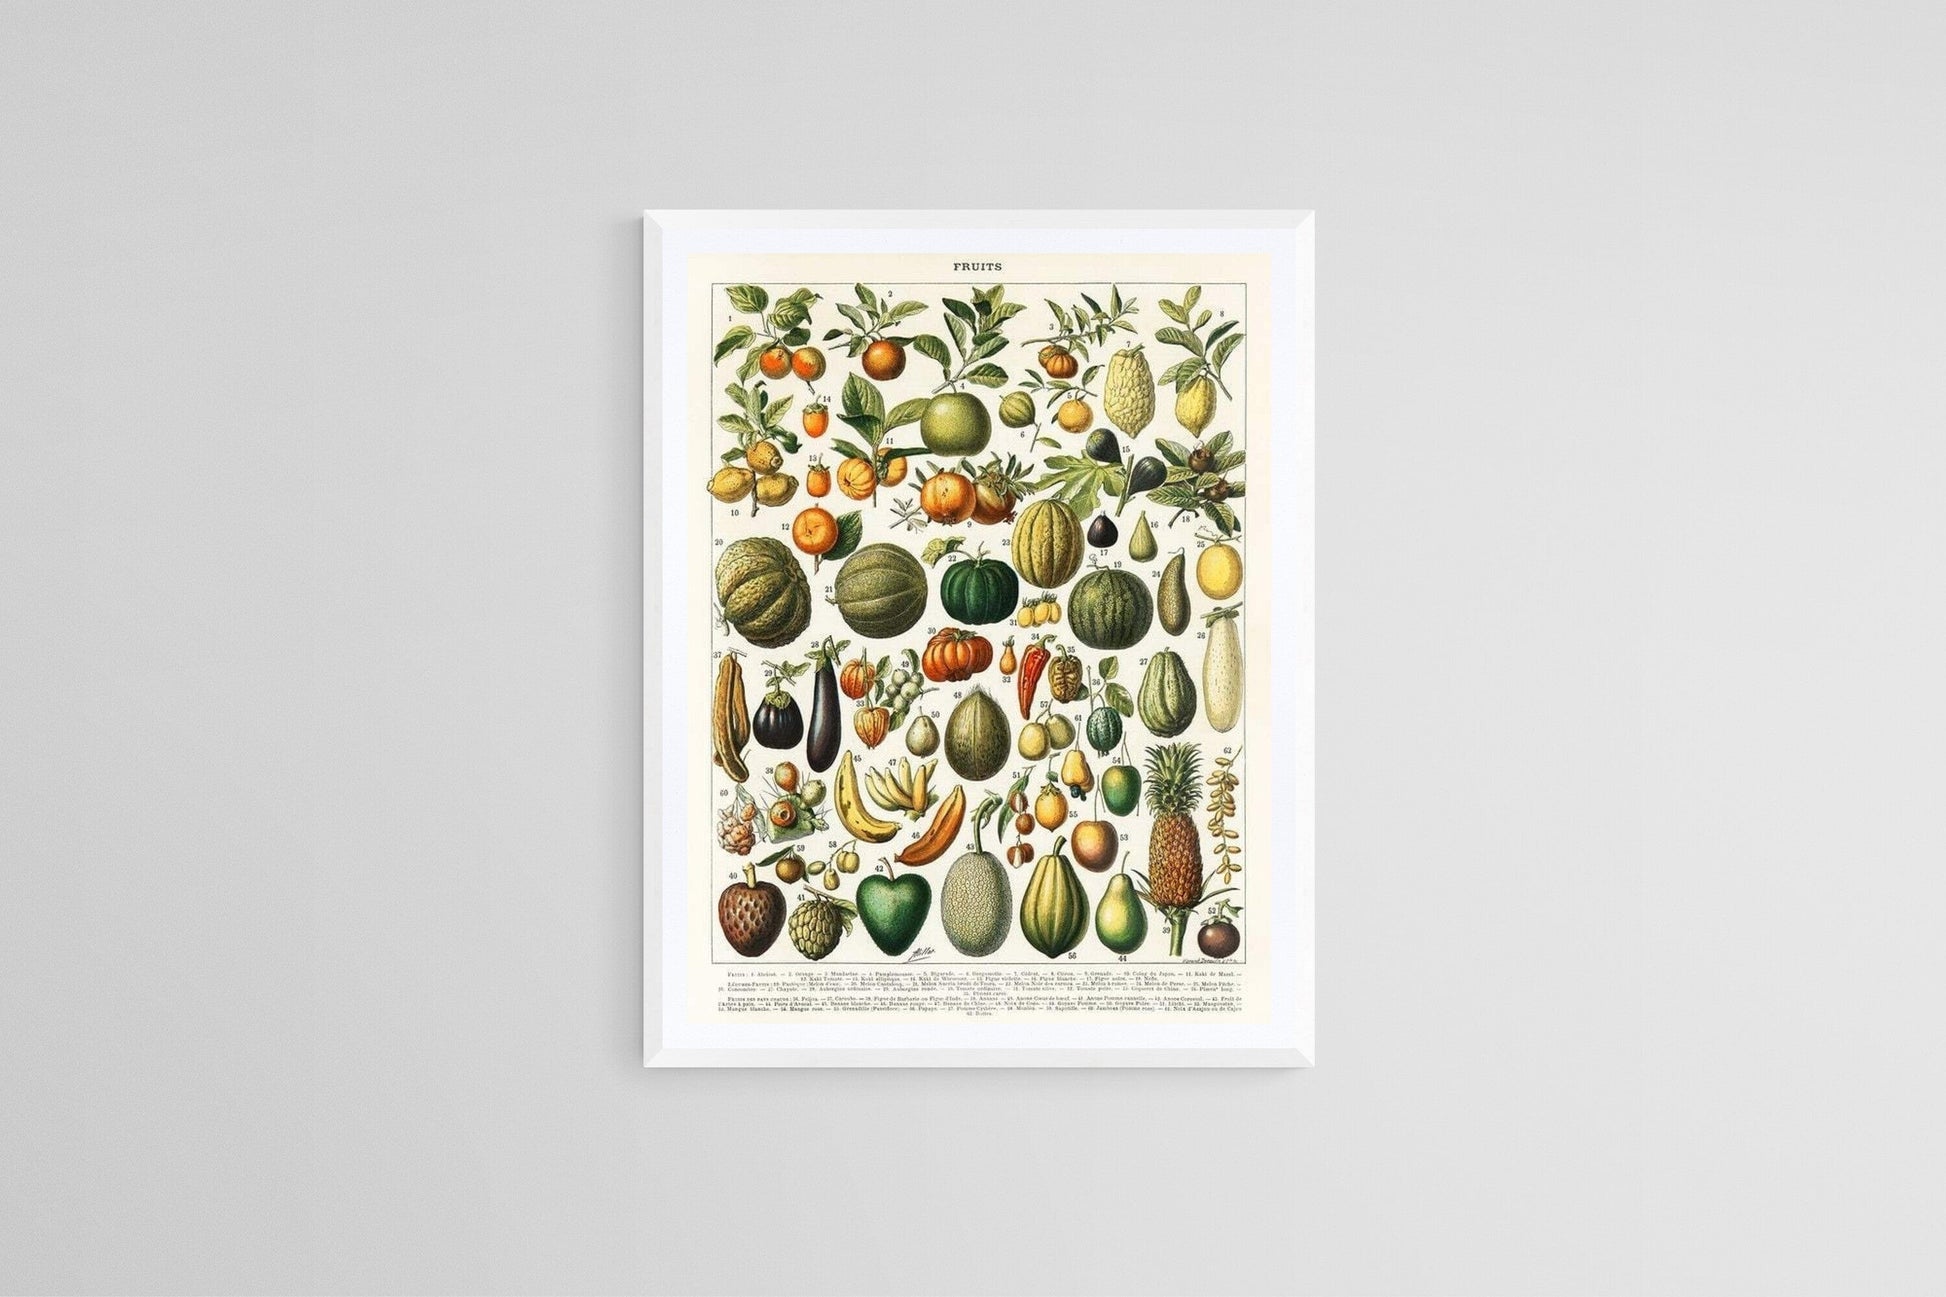 "Fruits and vegetables" (1898) | Botanical prints | Kitchen wall art Posters, Prints, & Visual Artwork The Trumpet Shop   